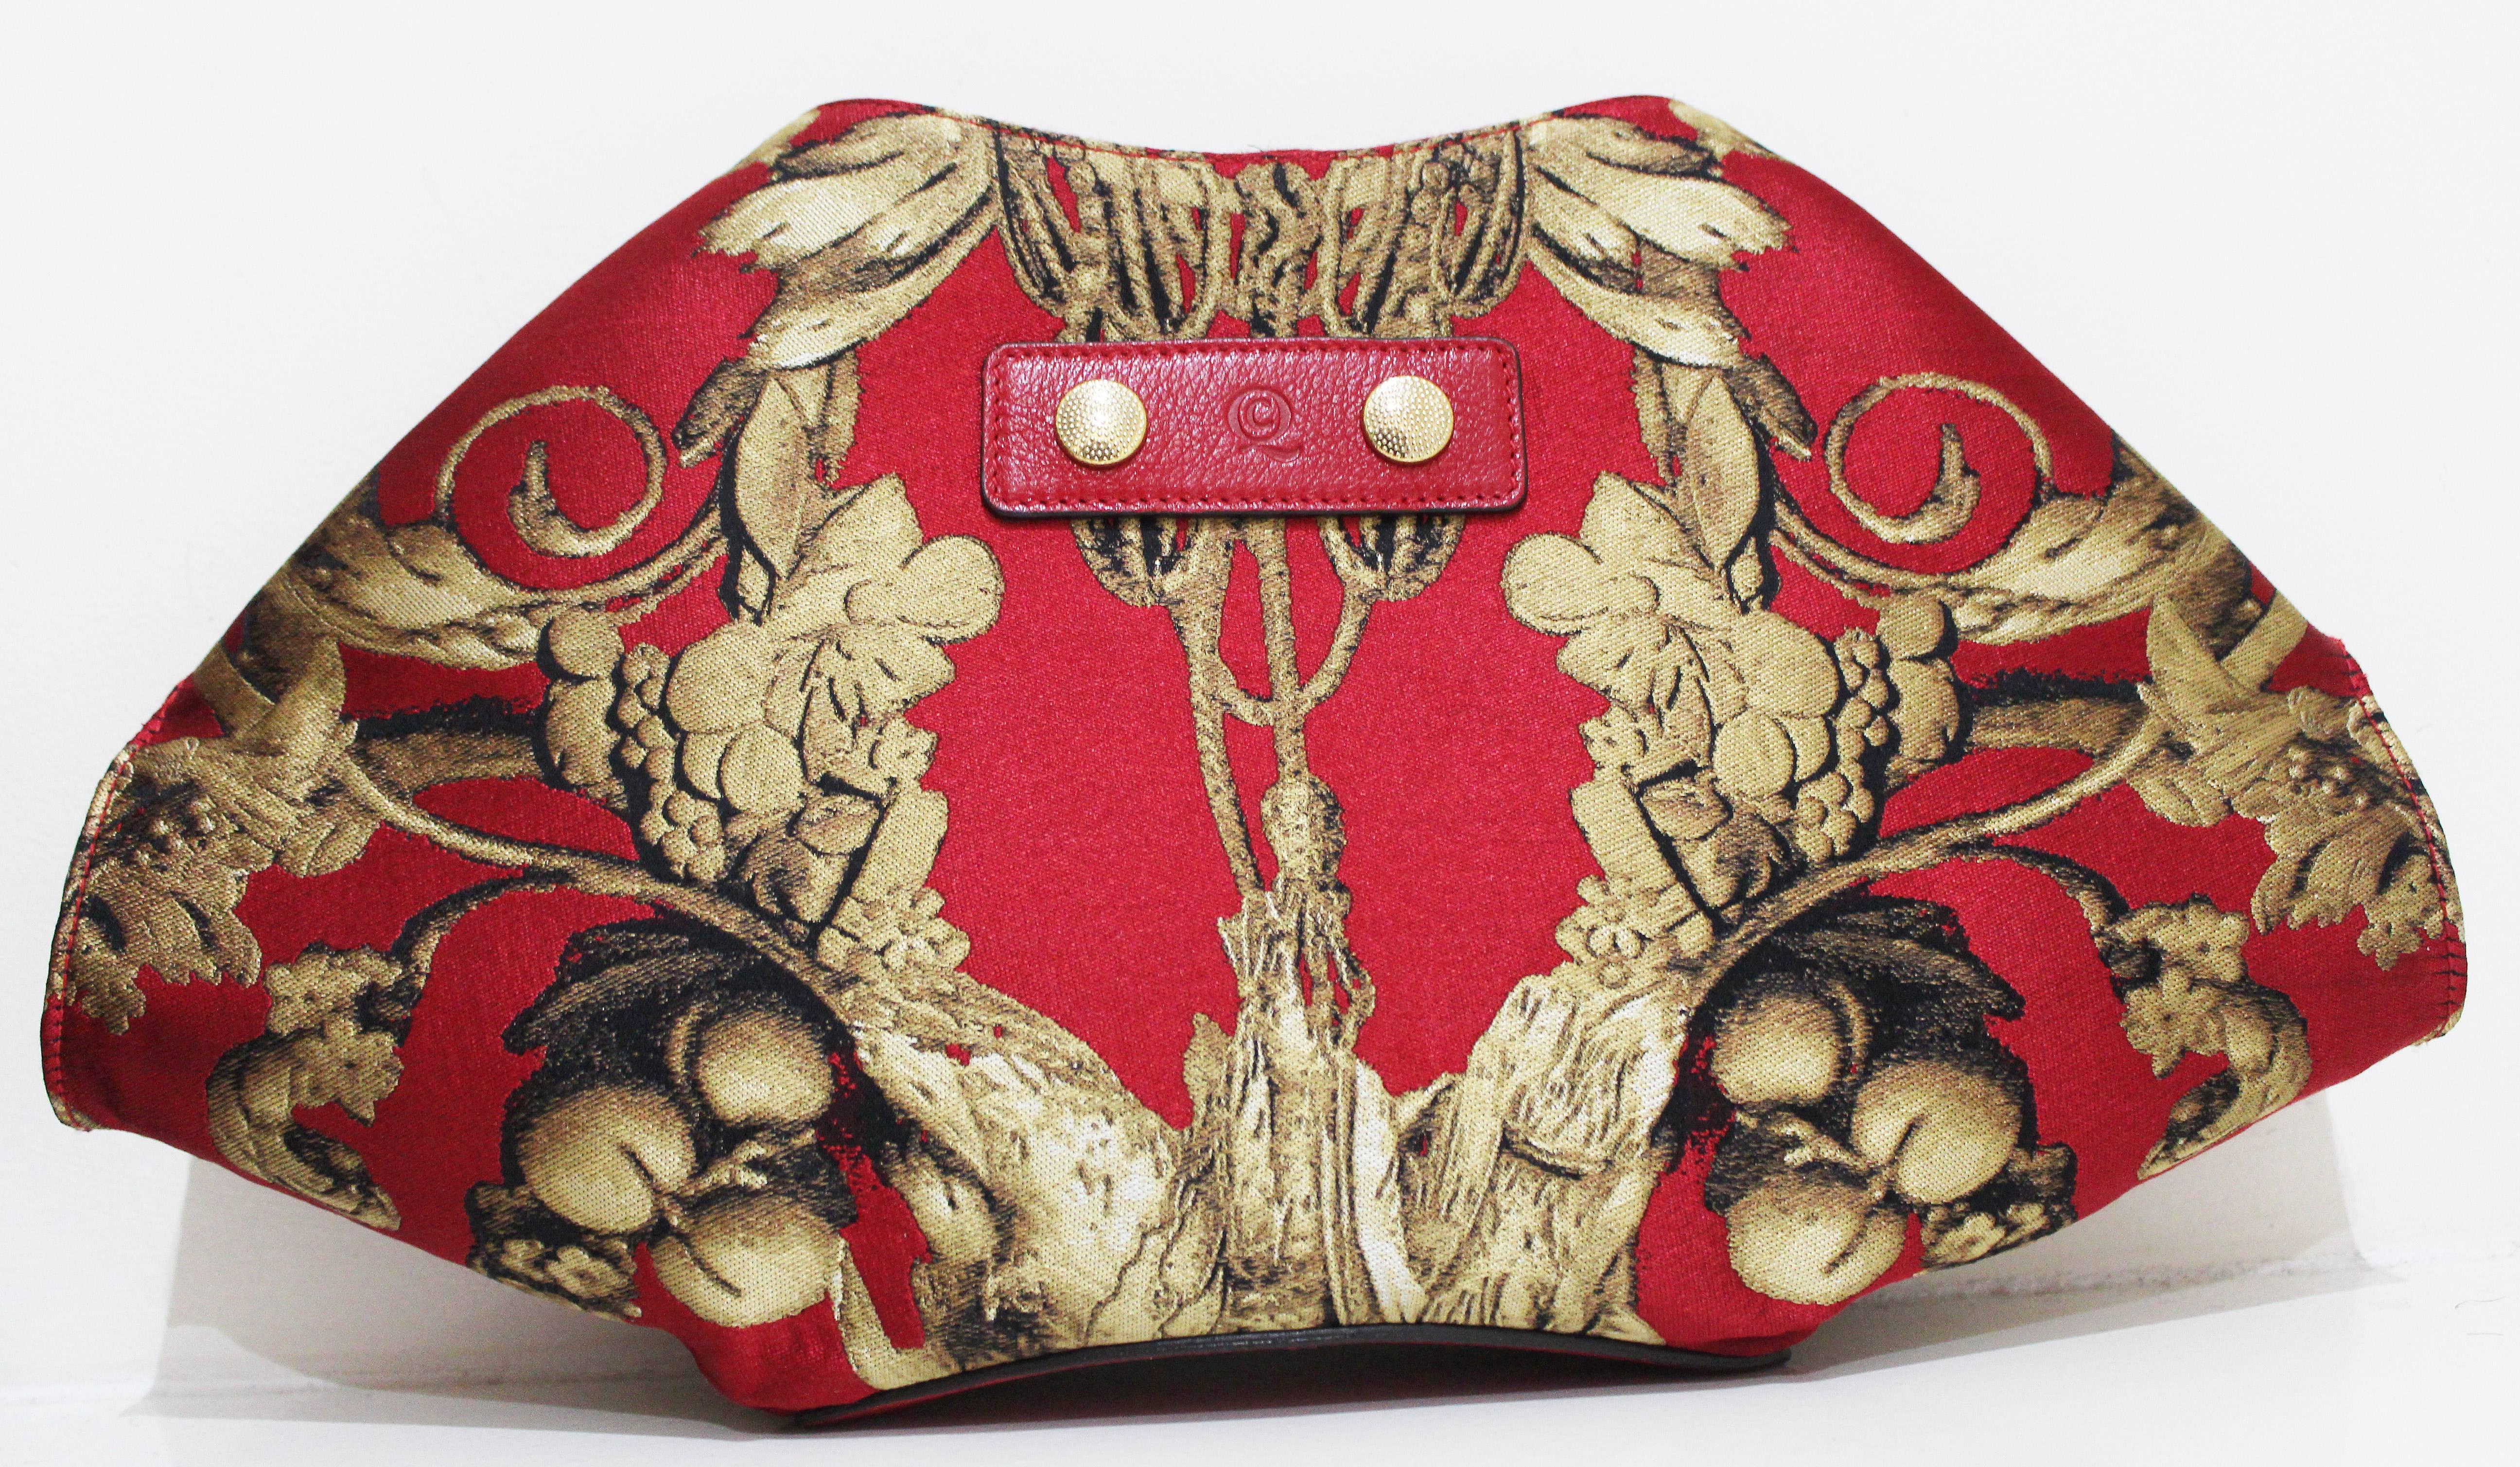 Brown Rare Alexander McQueen Red & Gold Gibbons Print de Manta Clutch Bag c. 2010